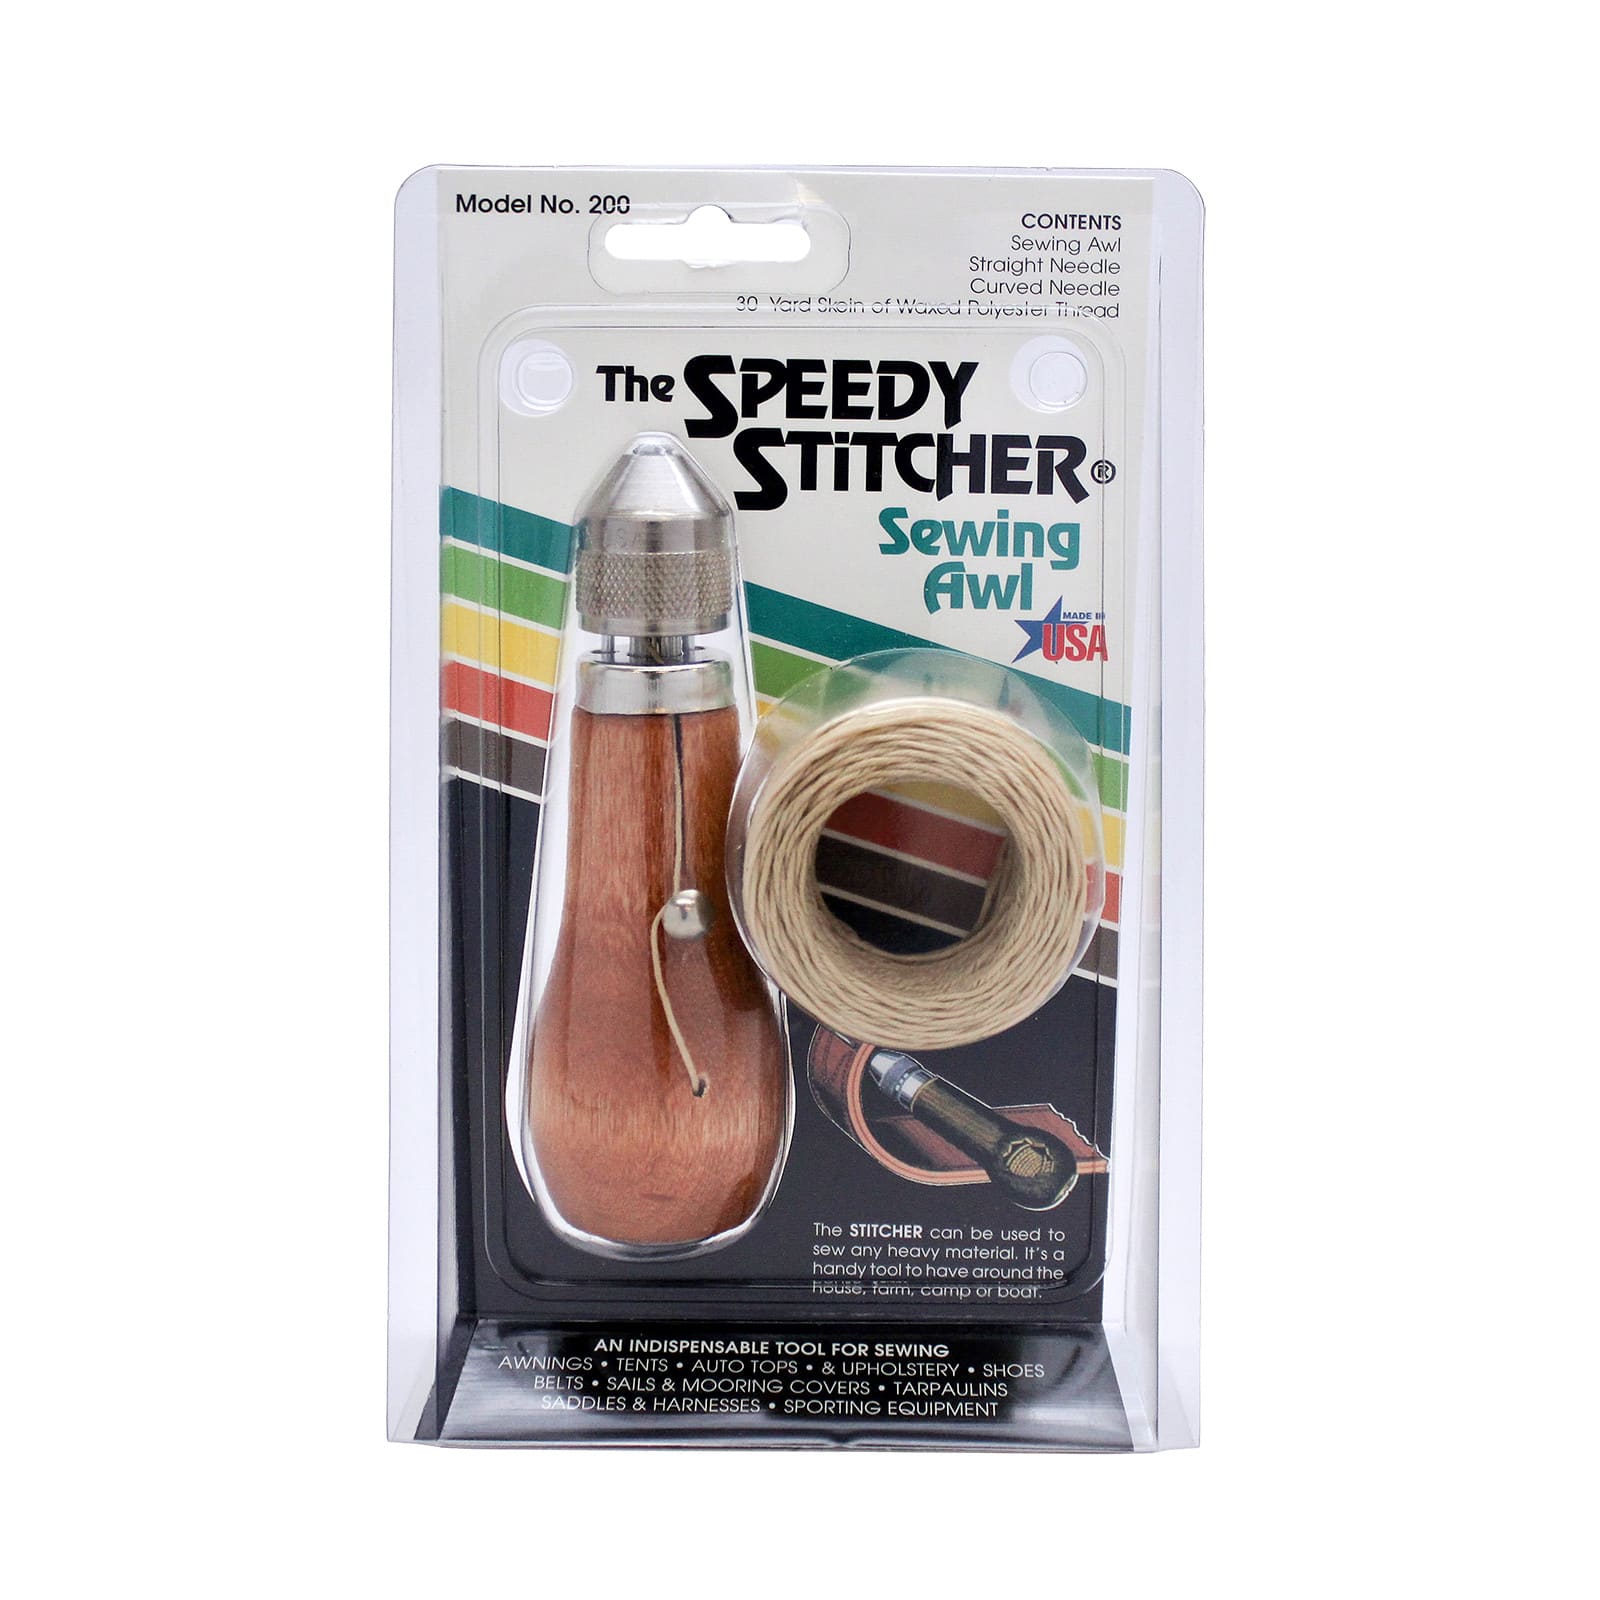 The Speedy Stitcher